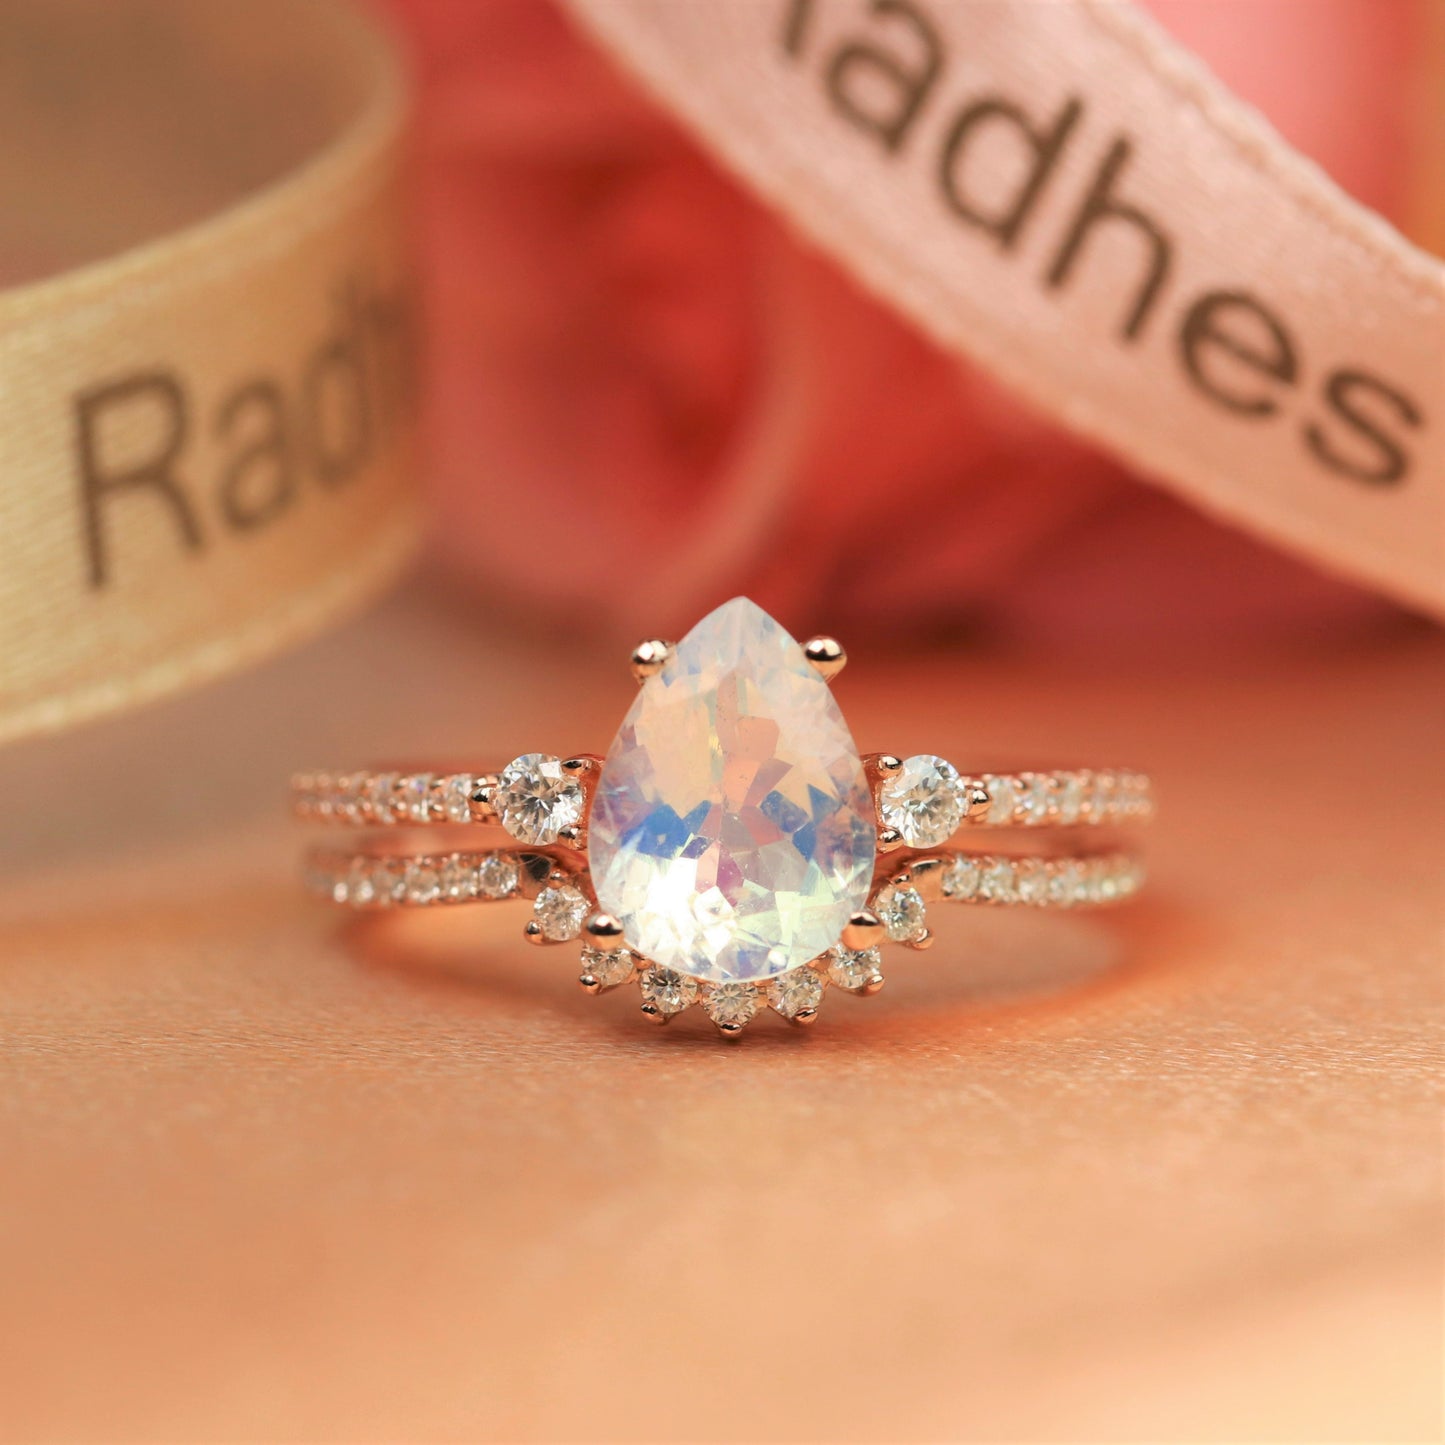 Half halo 1.5 carat pear shape Rainbow Moonstone vintage Wedding Ring Set in Rose Gold